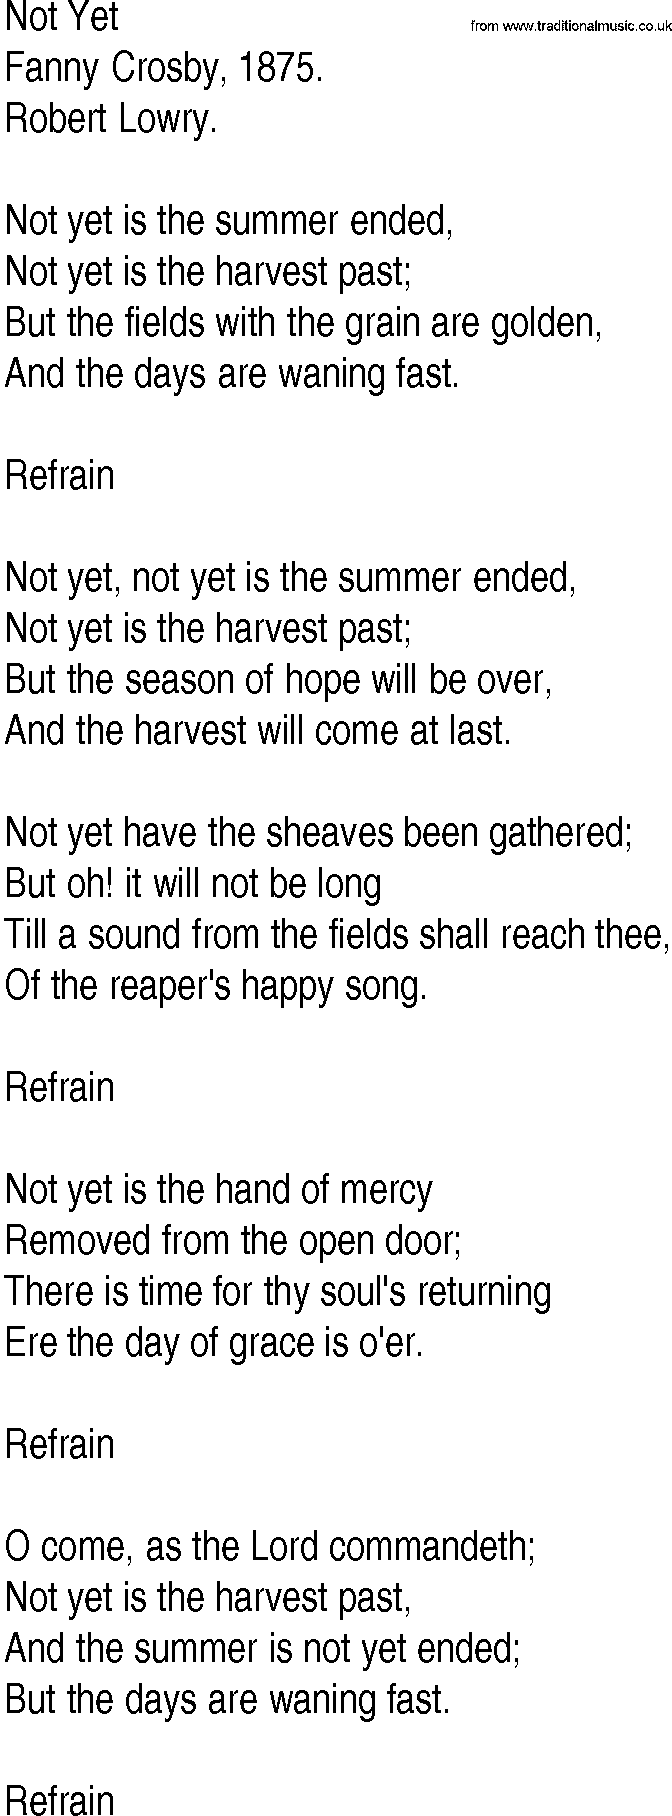 Hymn and Gospel Song: Not Yet by Fanny Crosby lyrics